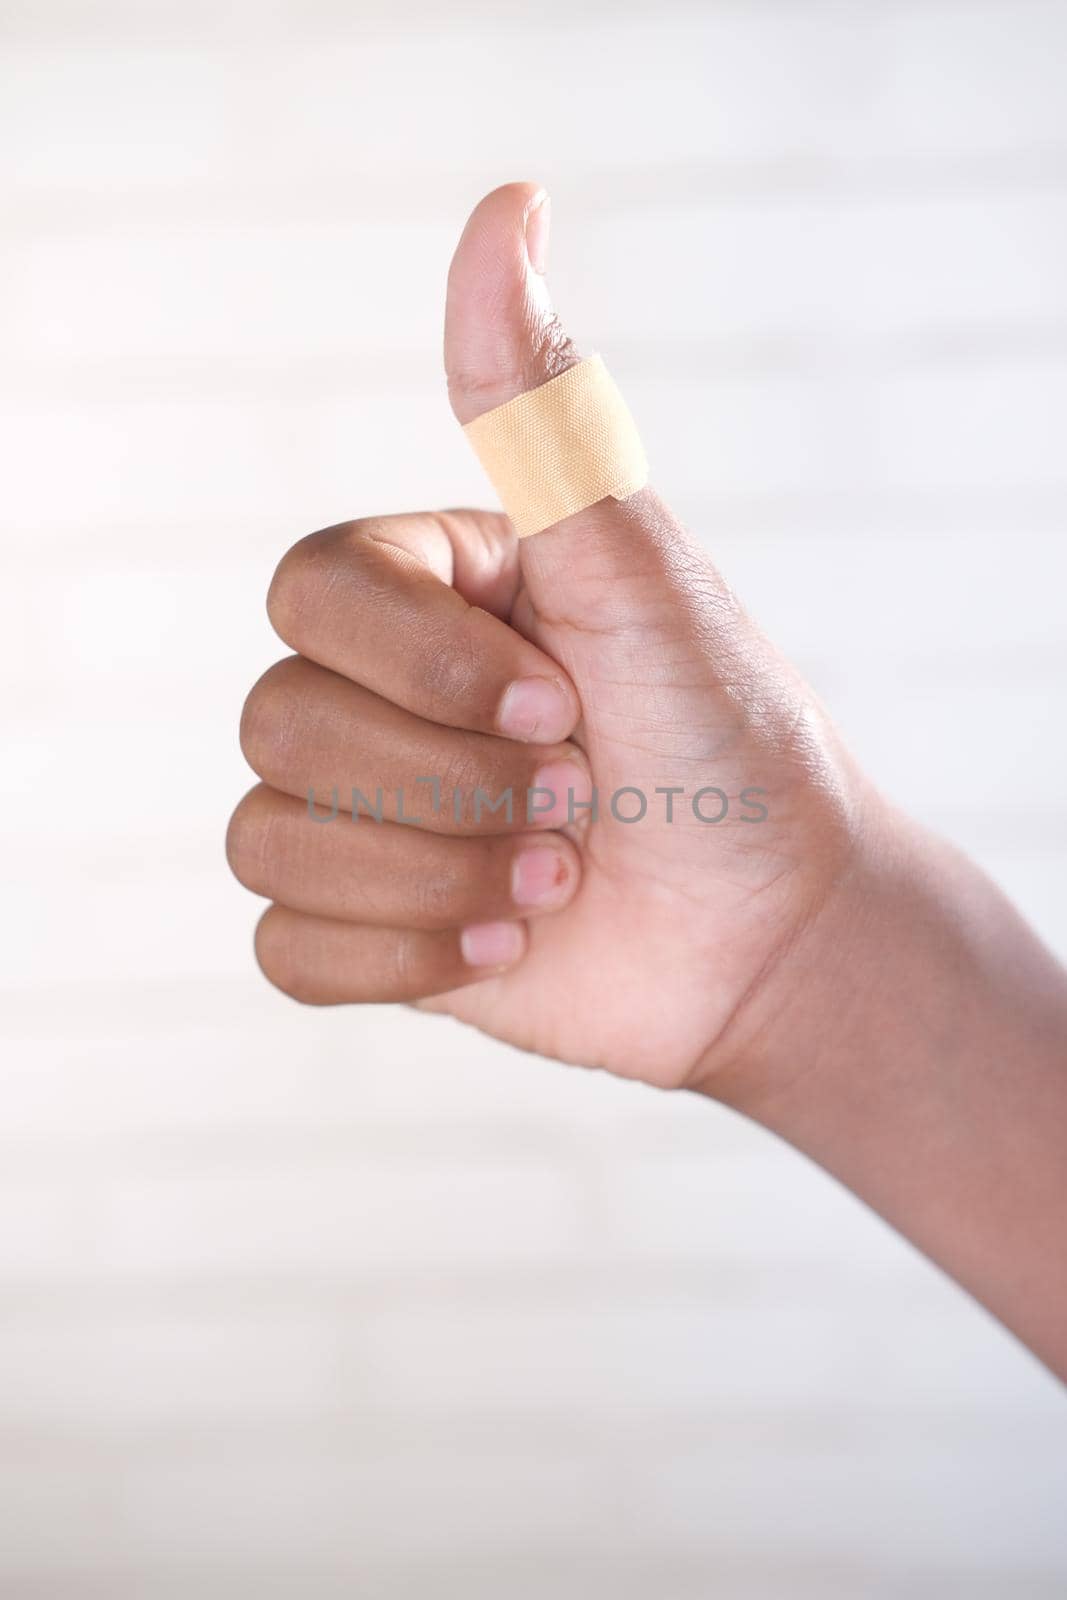 thumb finger with adhesive bandage wrapped around ..